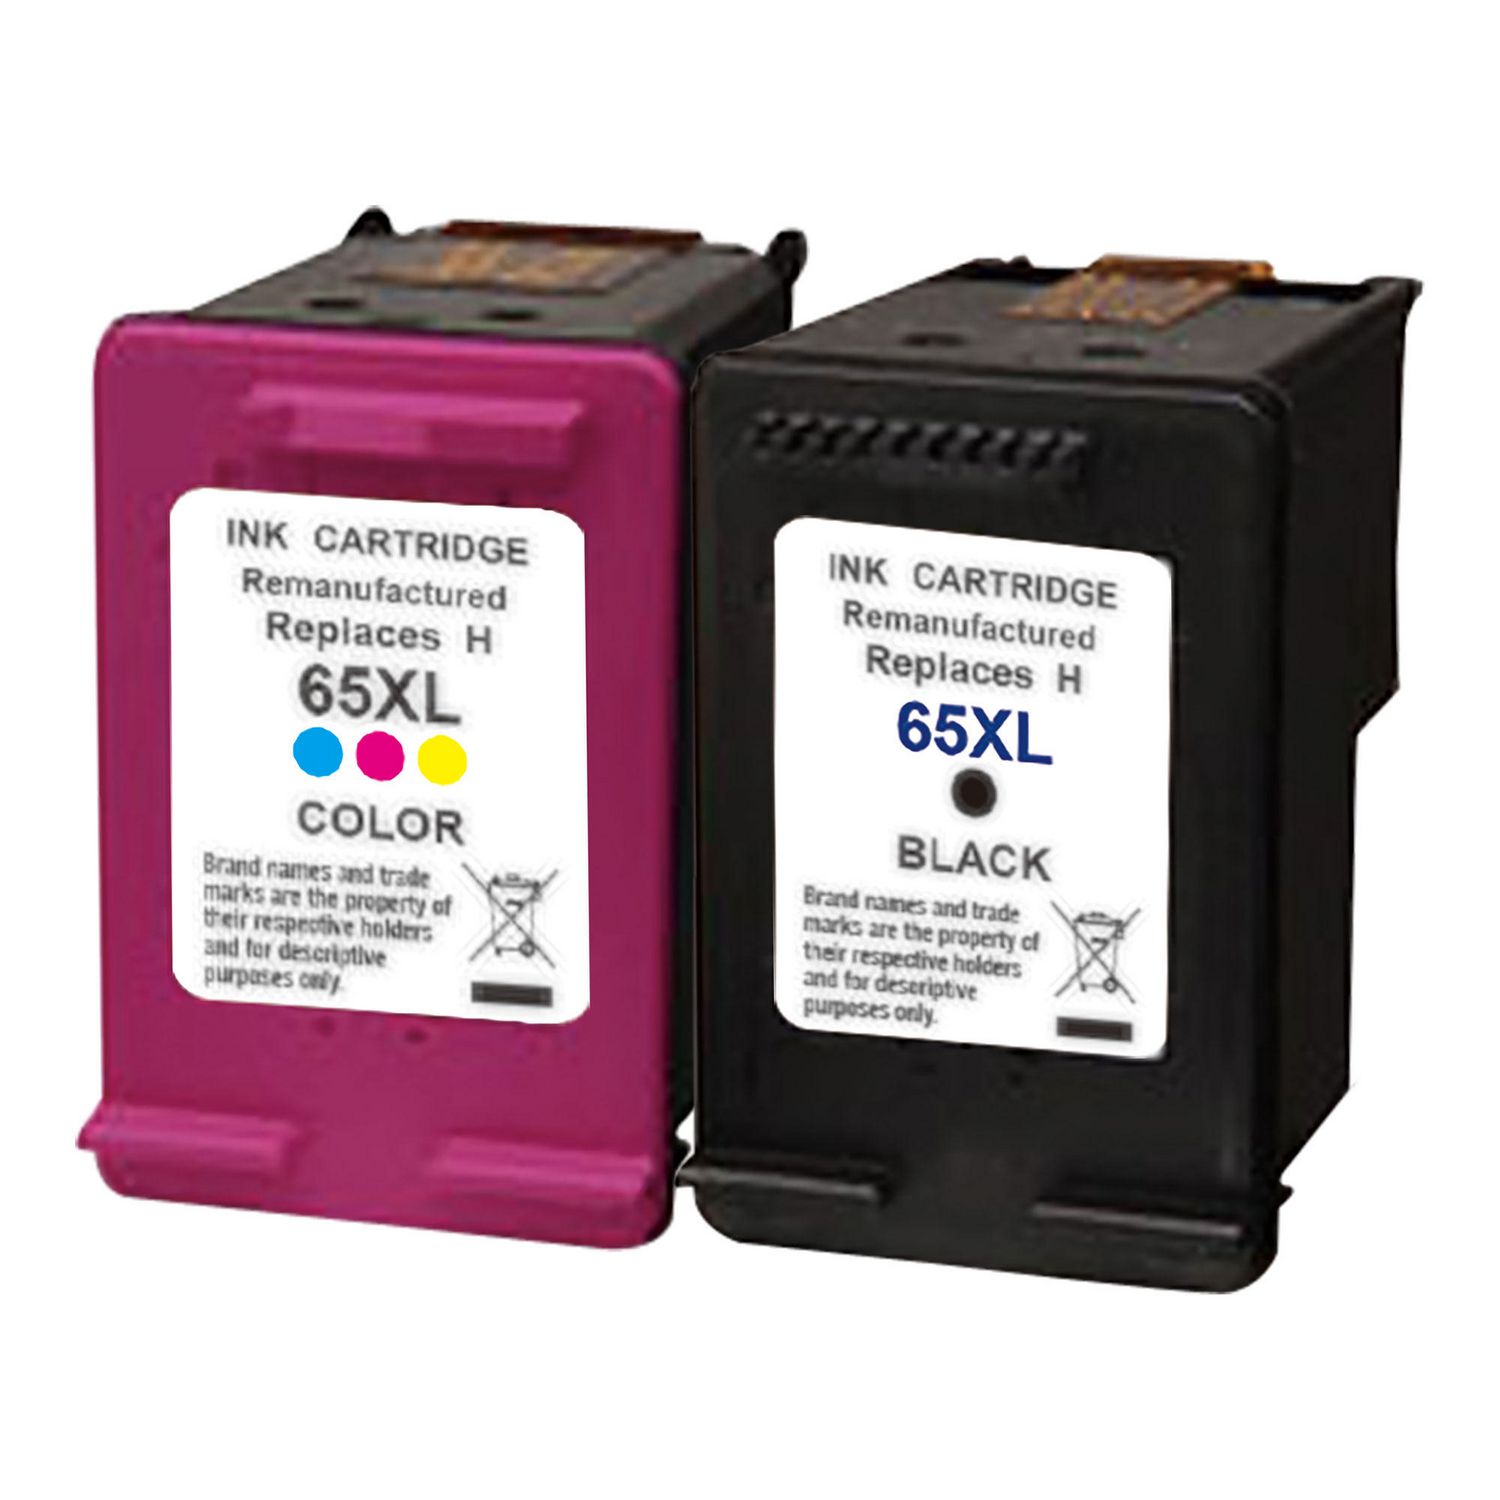 2 Ink Cartridge Compatible HP 65XL (N9K04AN N9K03AN ) Black Color